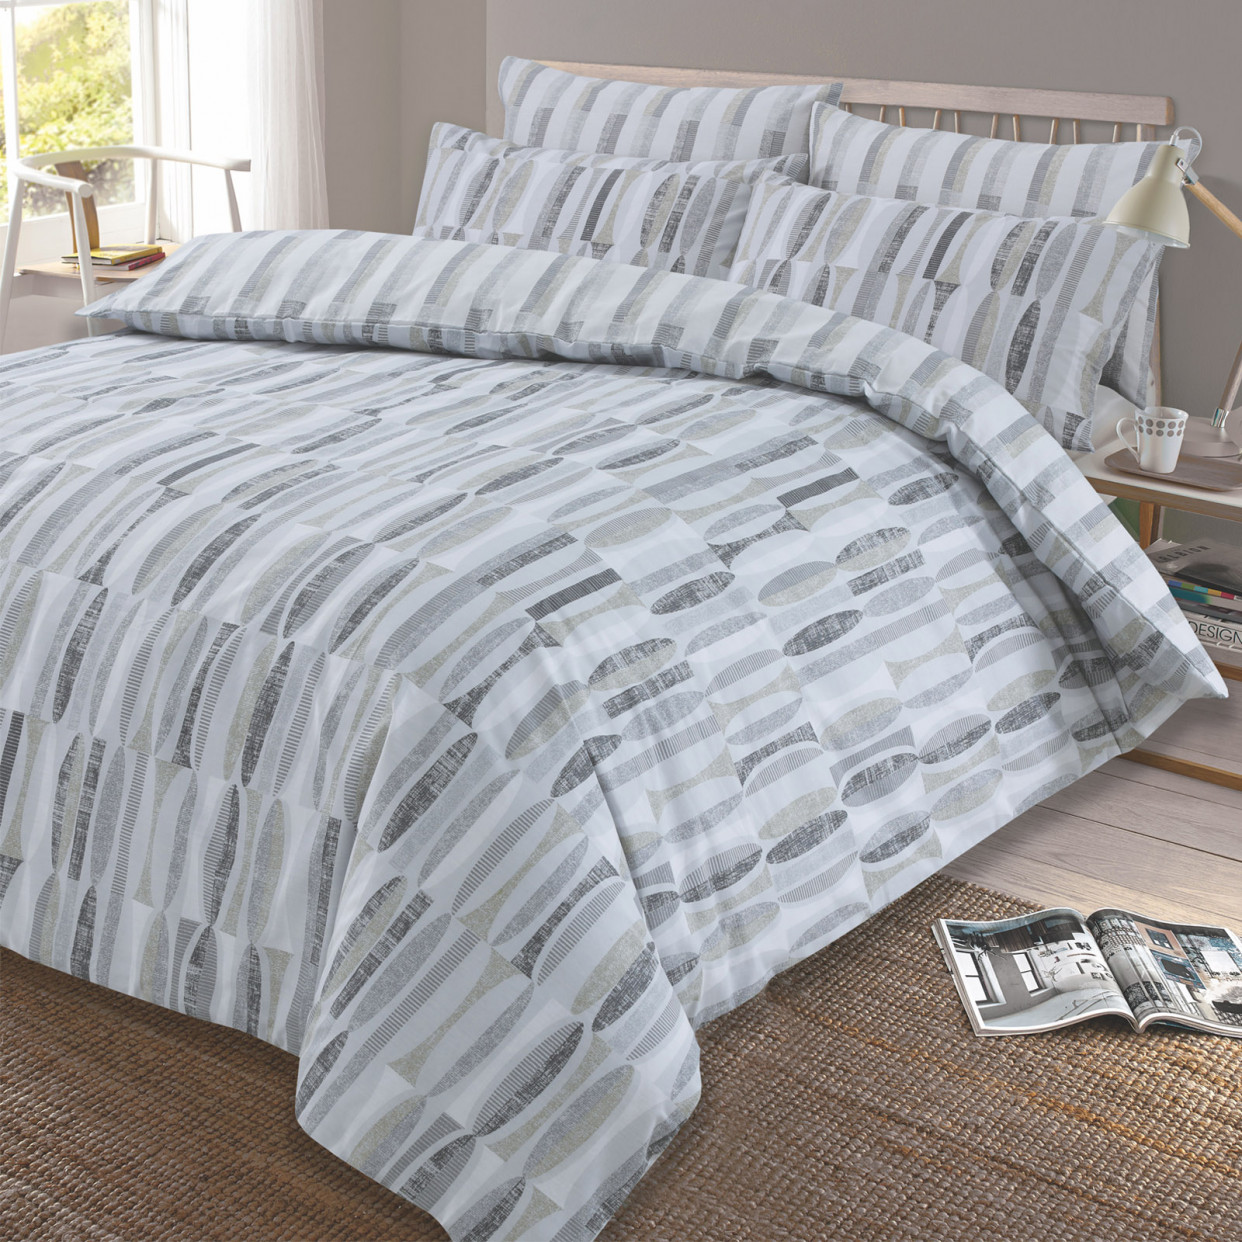 Dreamscene Ellipse Duvet Cover with Pillow Case Reversible Geometric Bedding Set, Charcoal Grey Silver - Single>